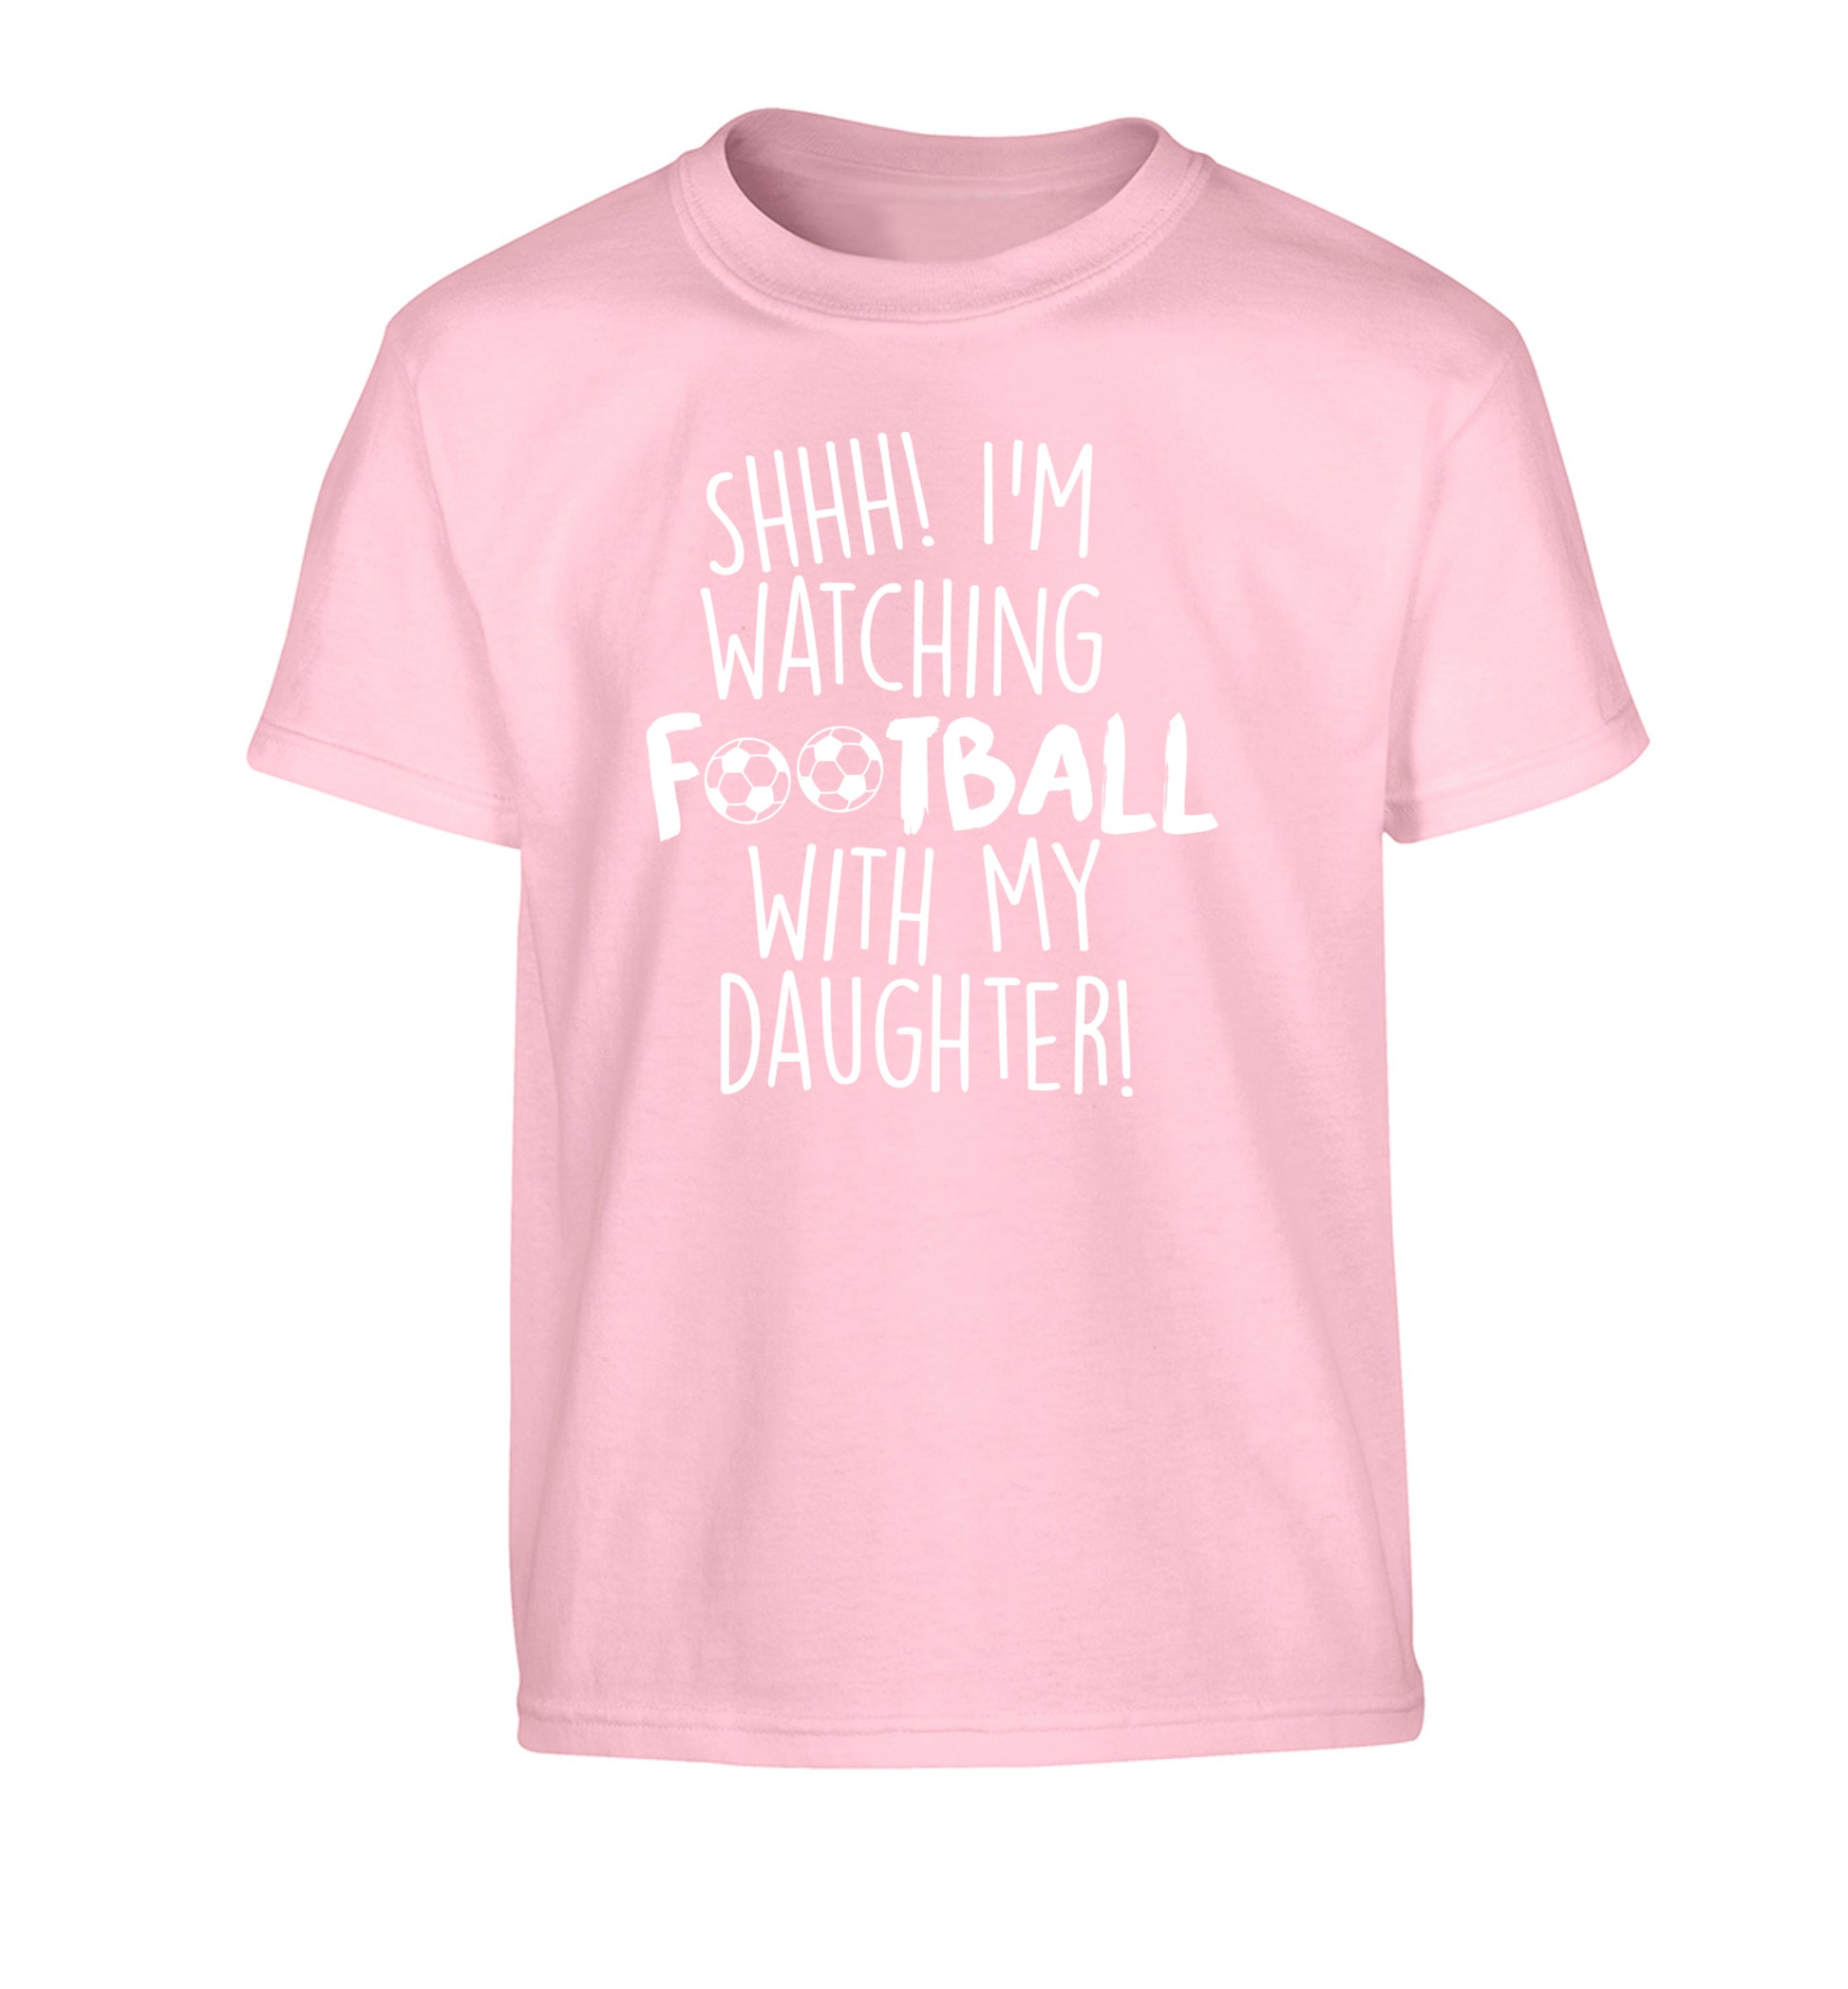 Shhh I'm watching football with my daughter Children's light pink Tshirt 12-14 Years